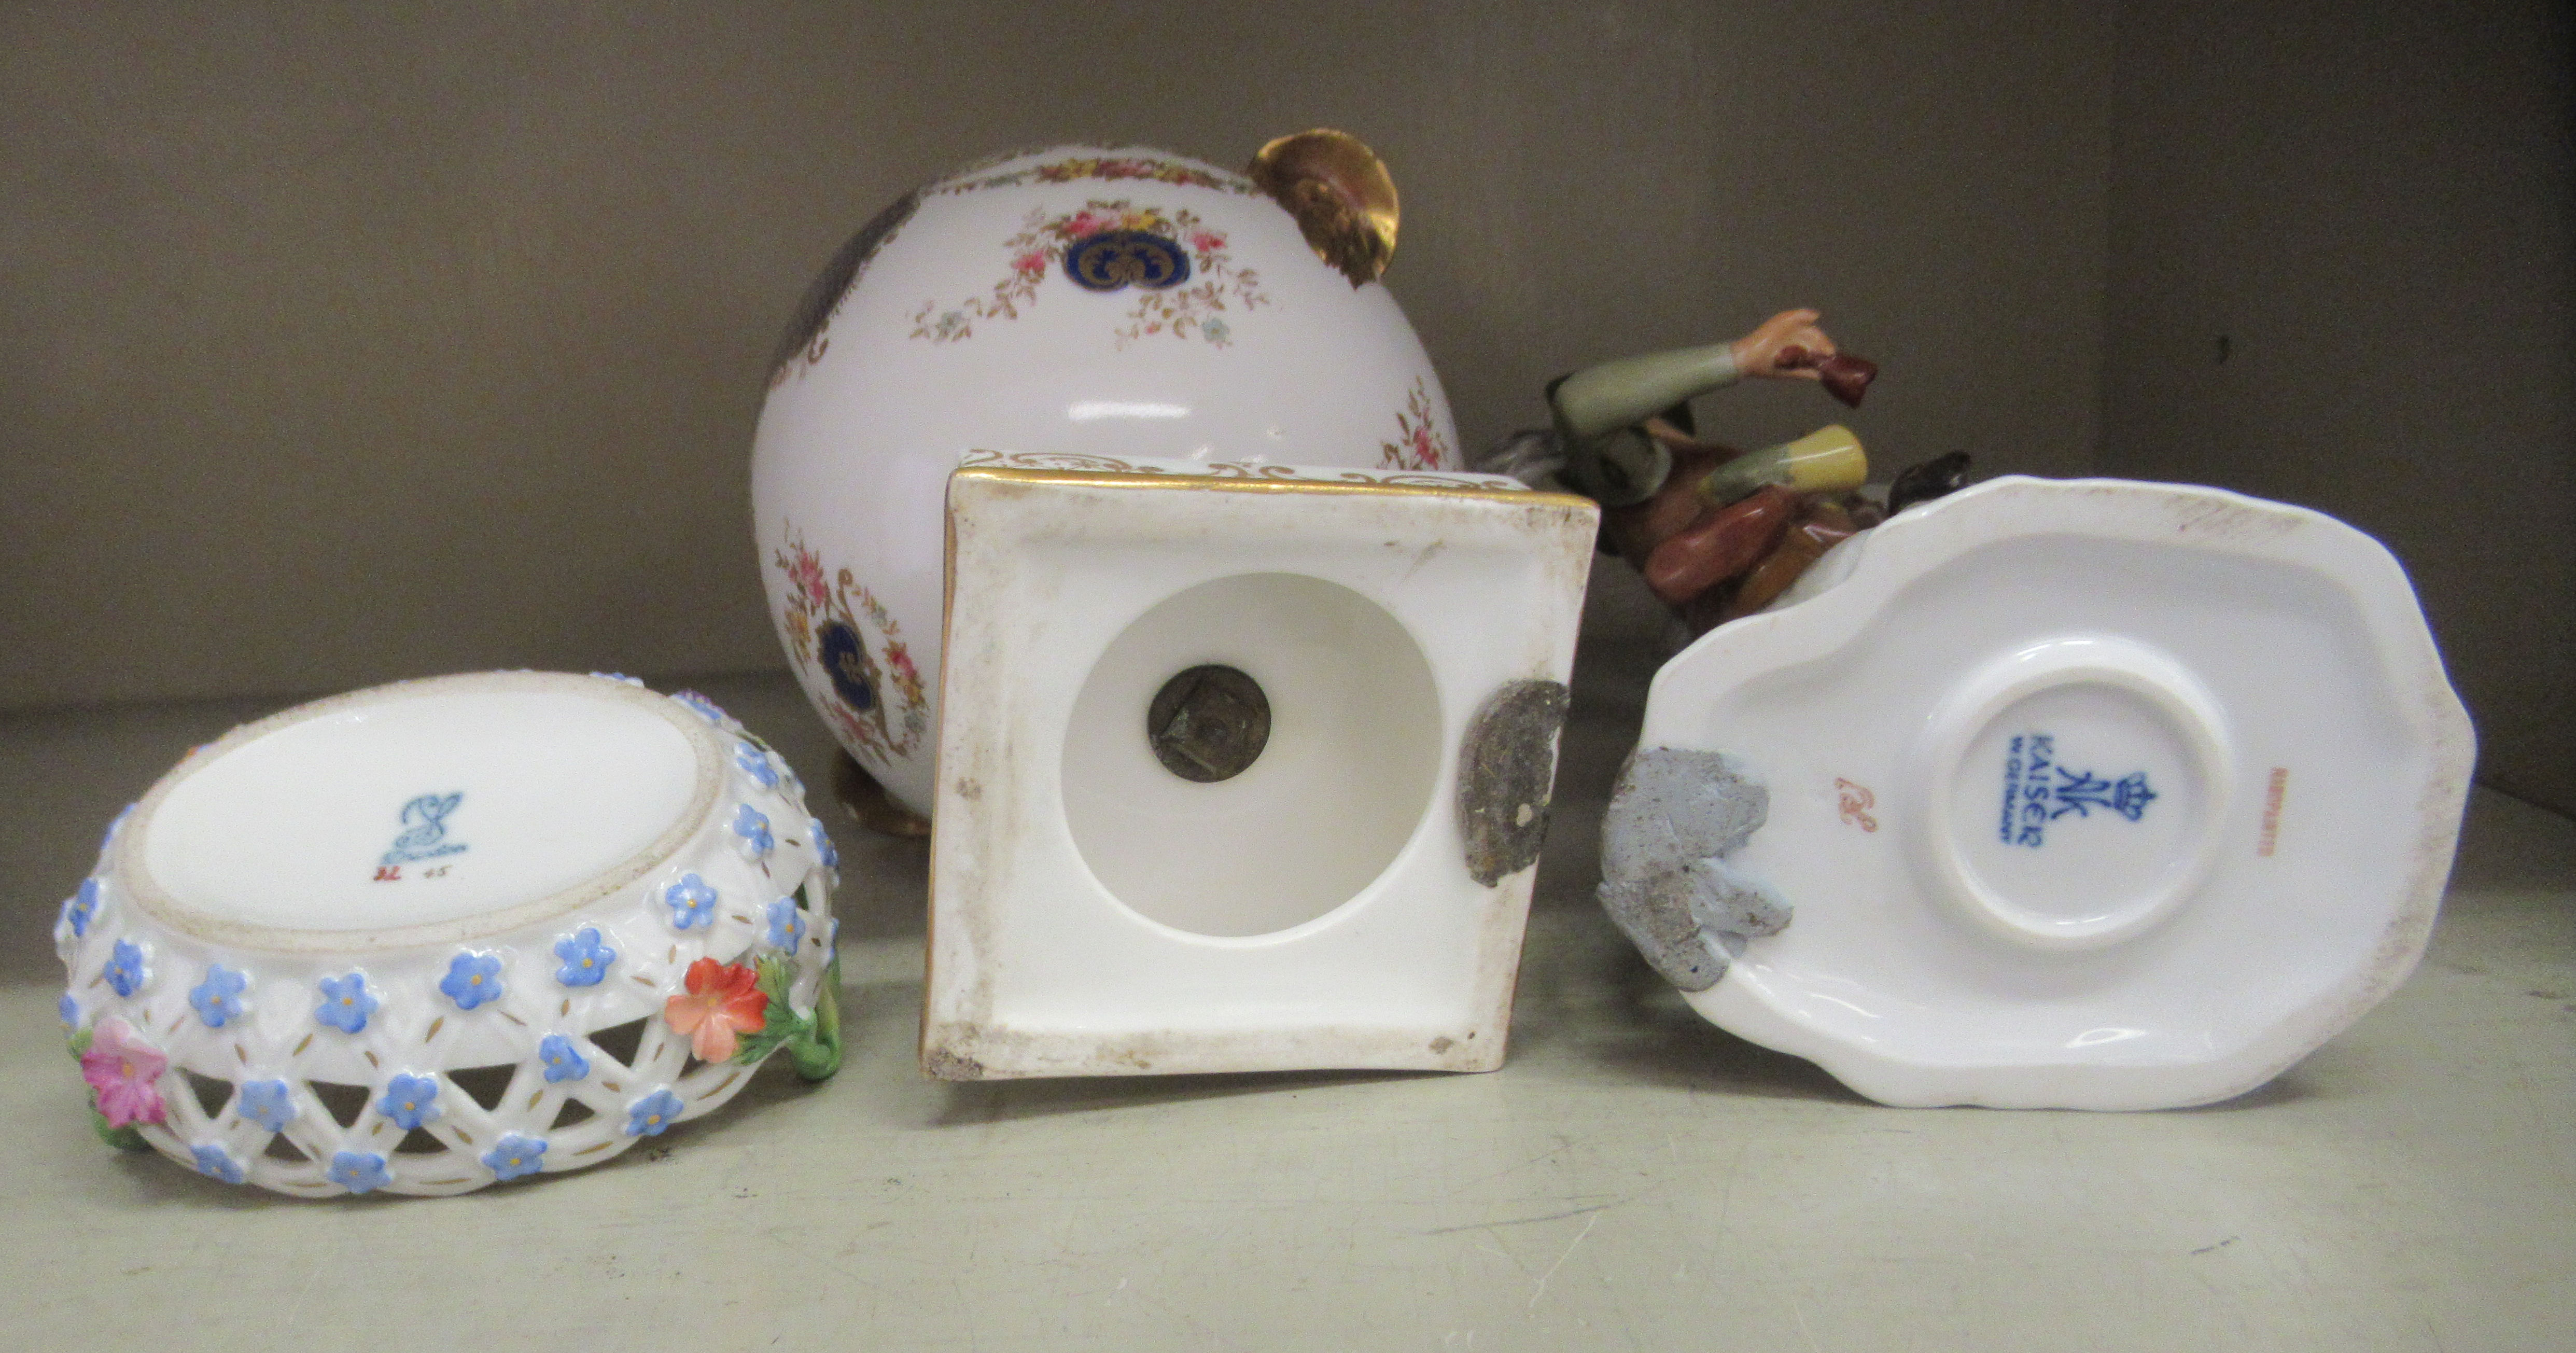 Decorative ceramics: to include a Kaiser porcelain figure, a hunter  10"h - Image 9 of 9